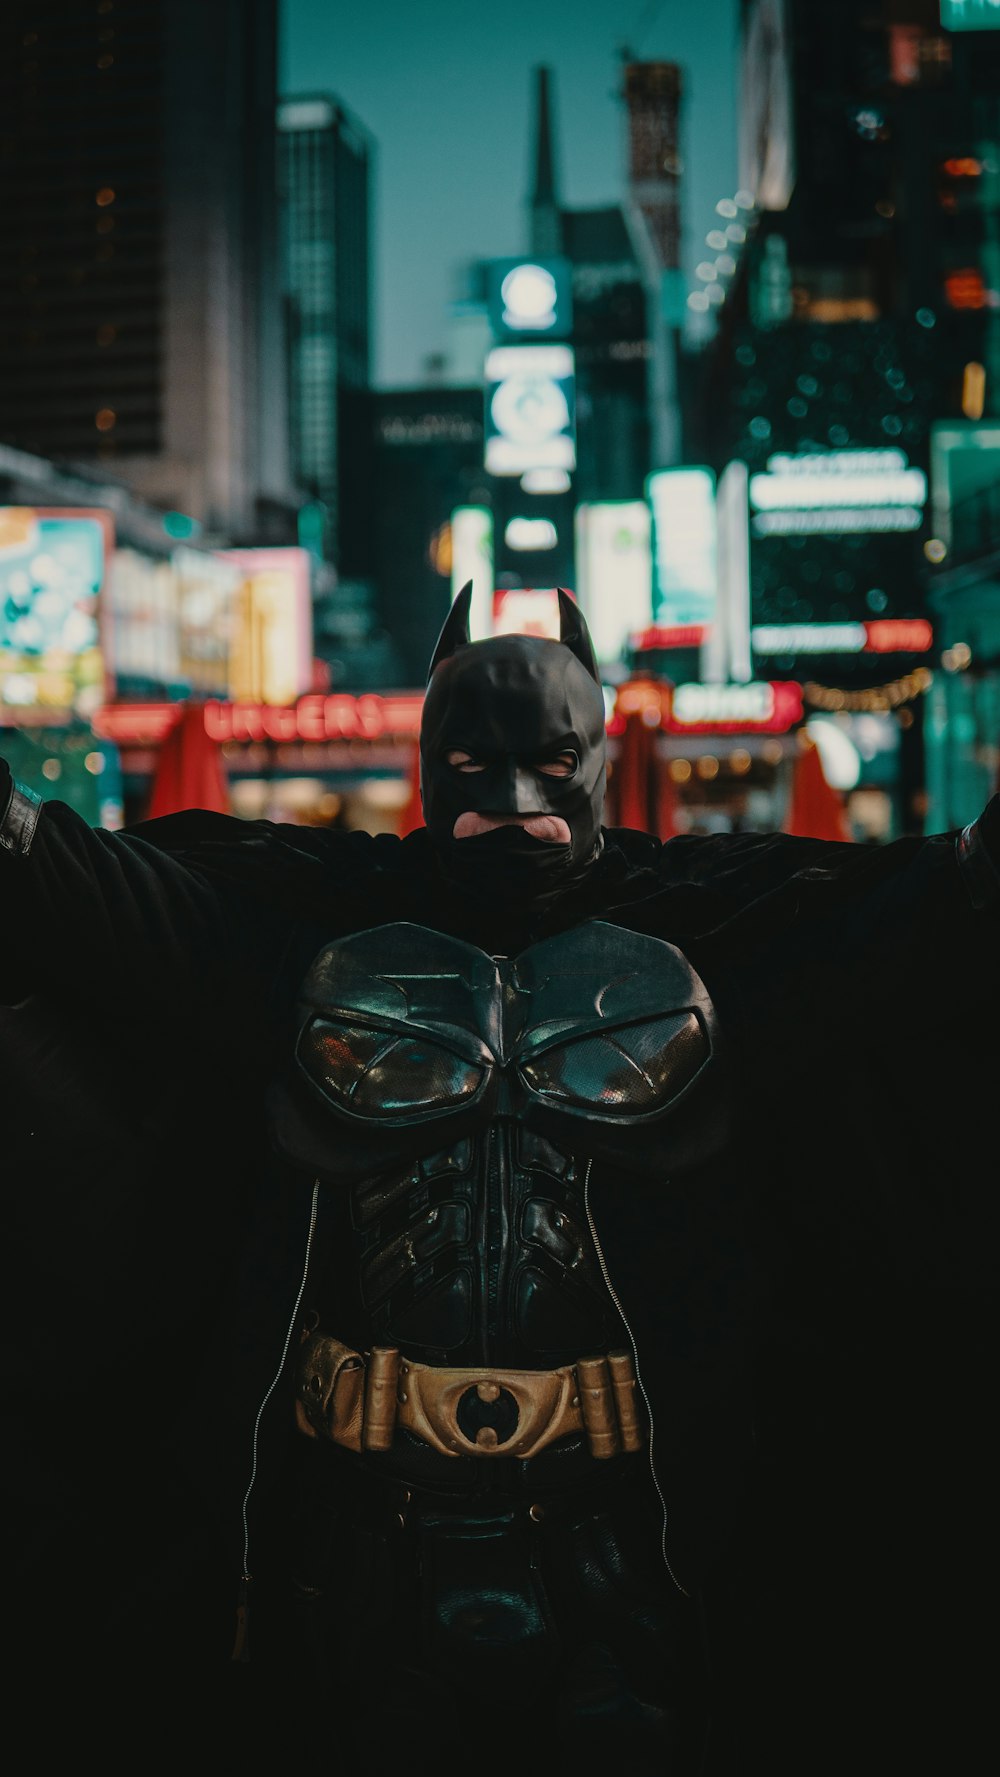 man wearing Batman costume